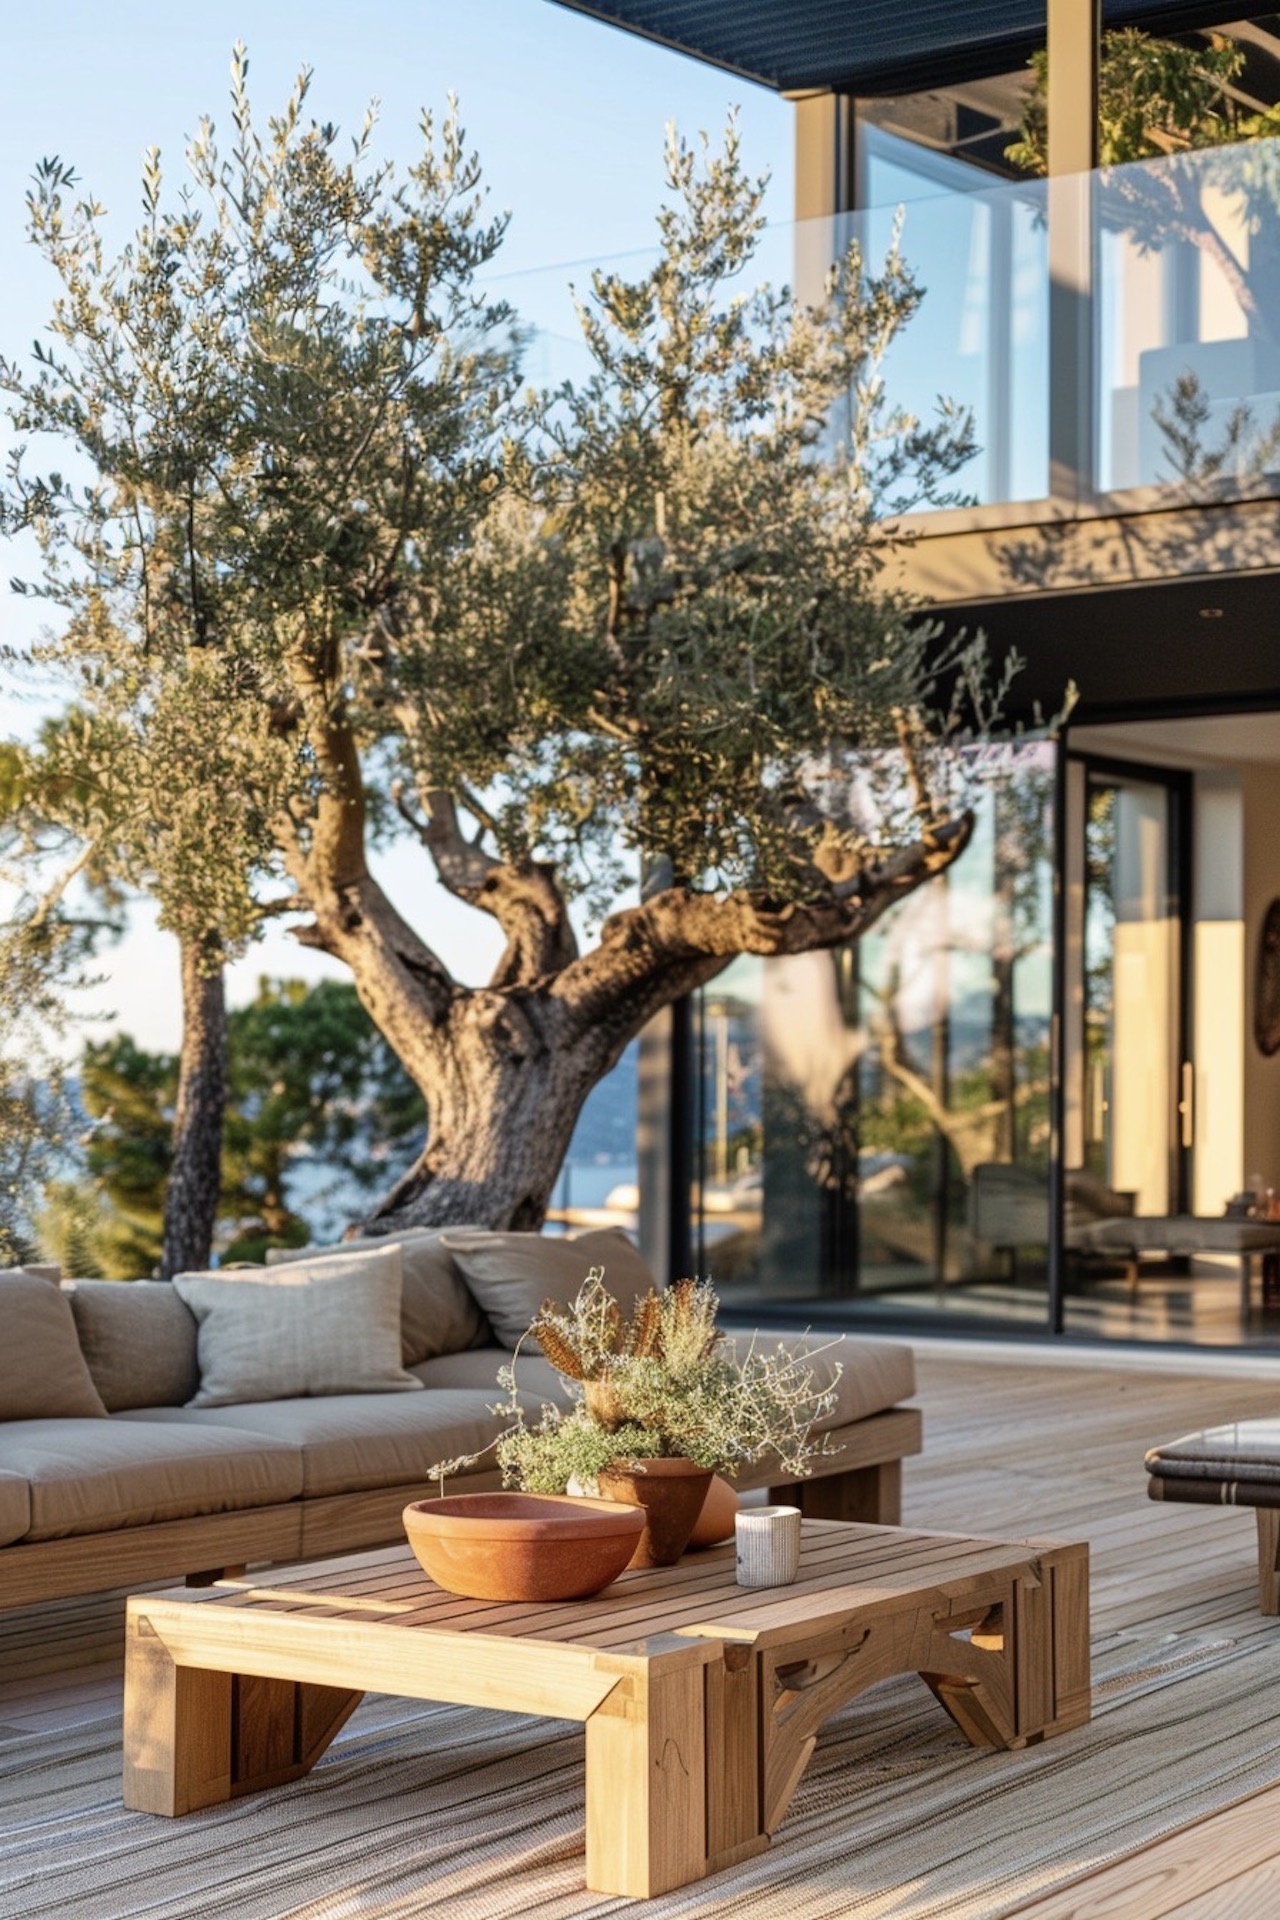 terrasse méditerranéenne villa moderne vieil olivier centenaire